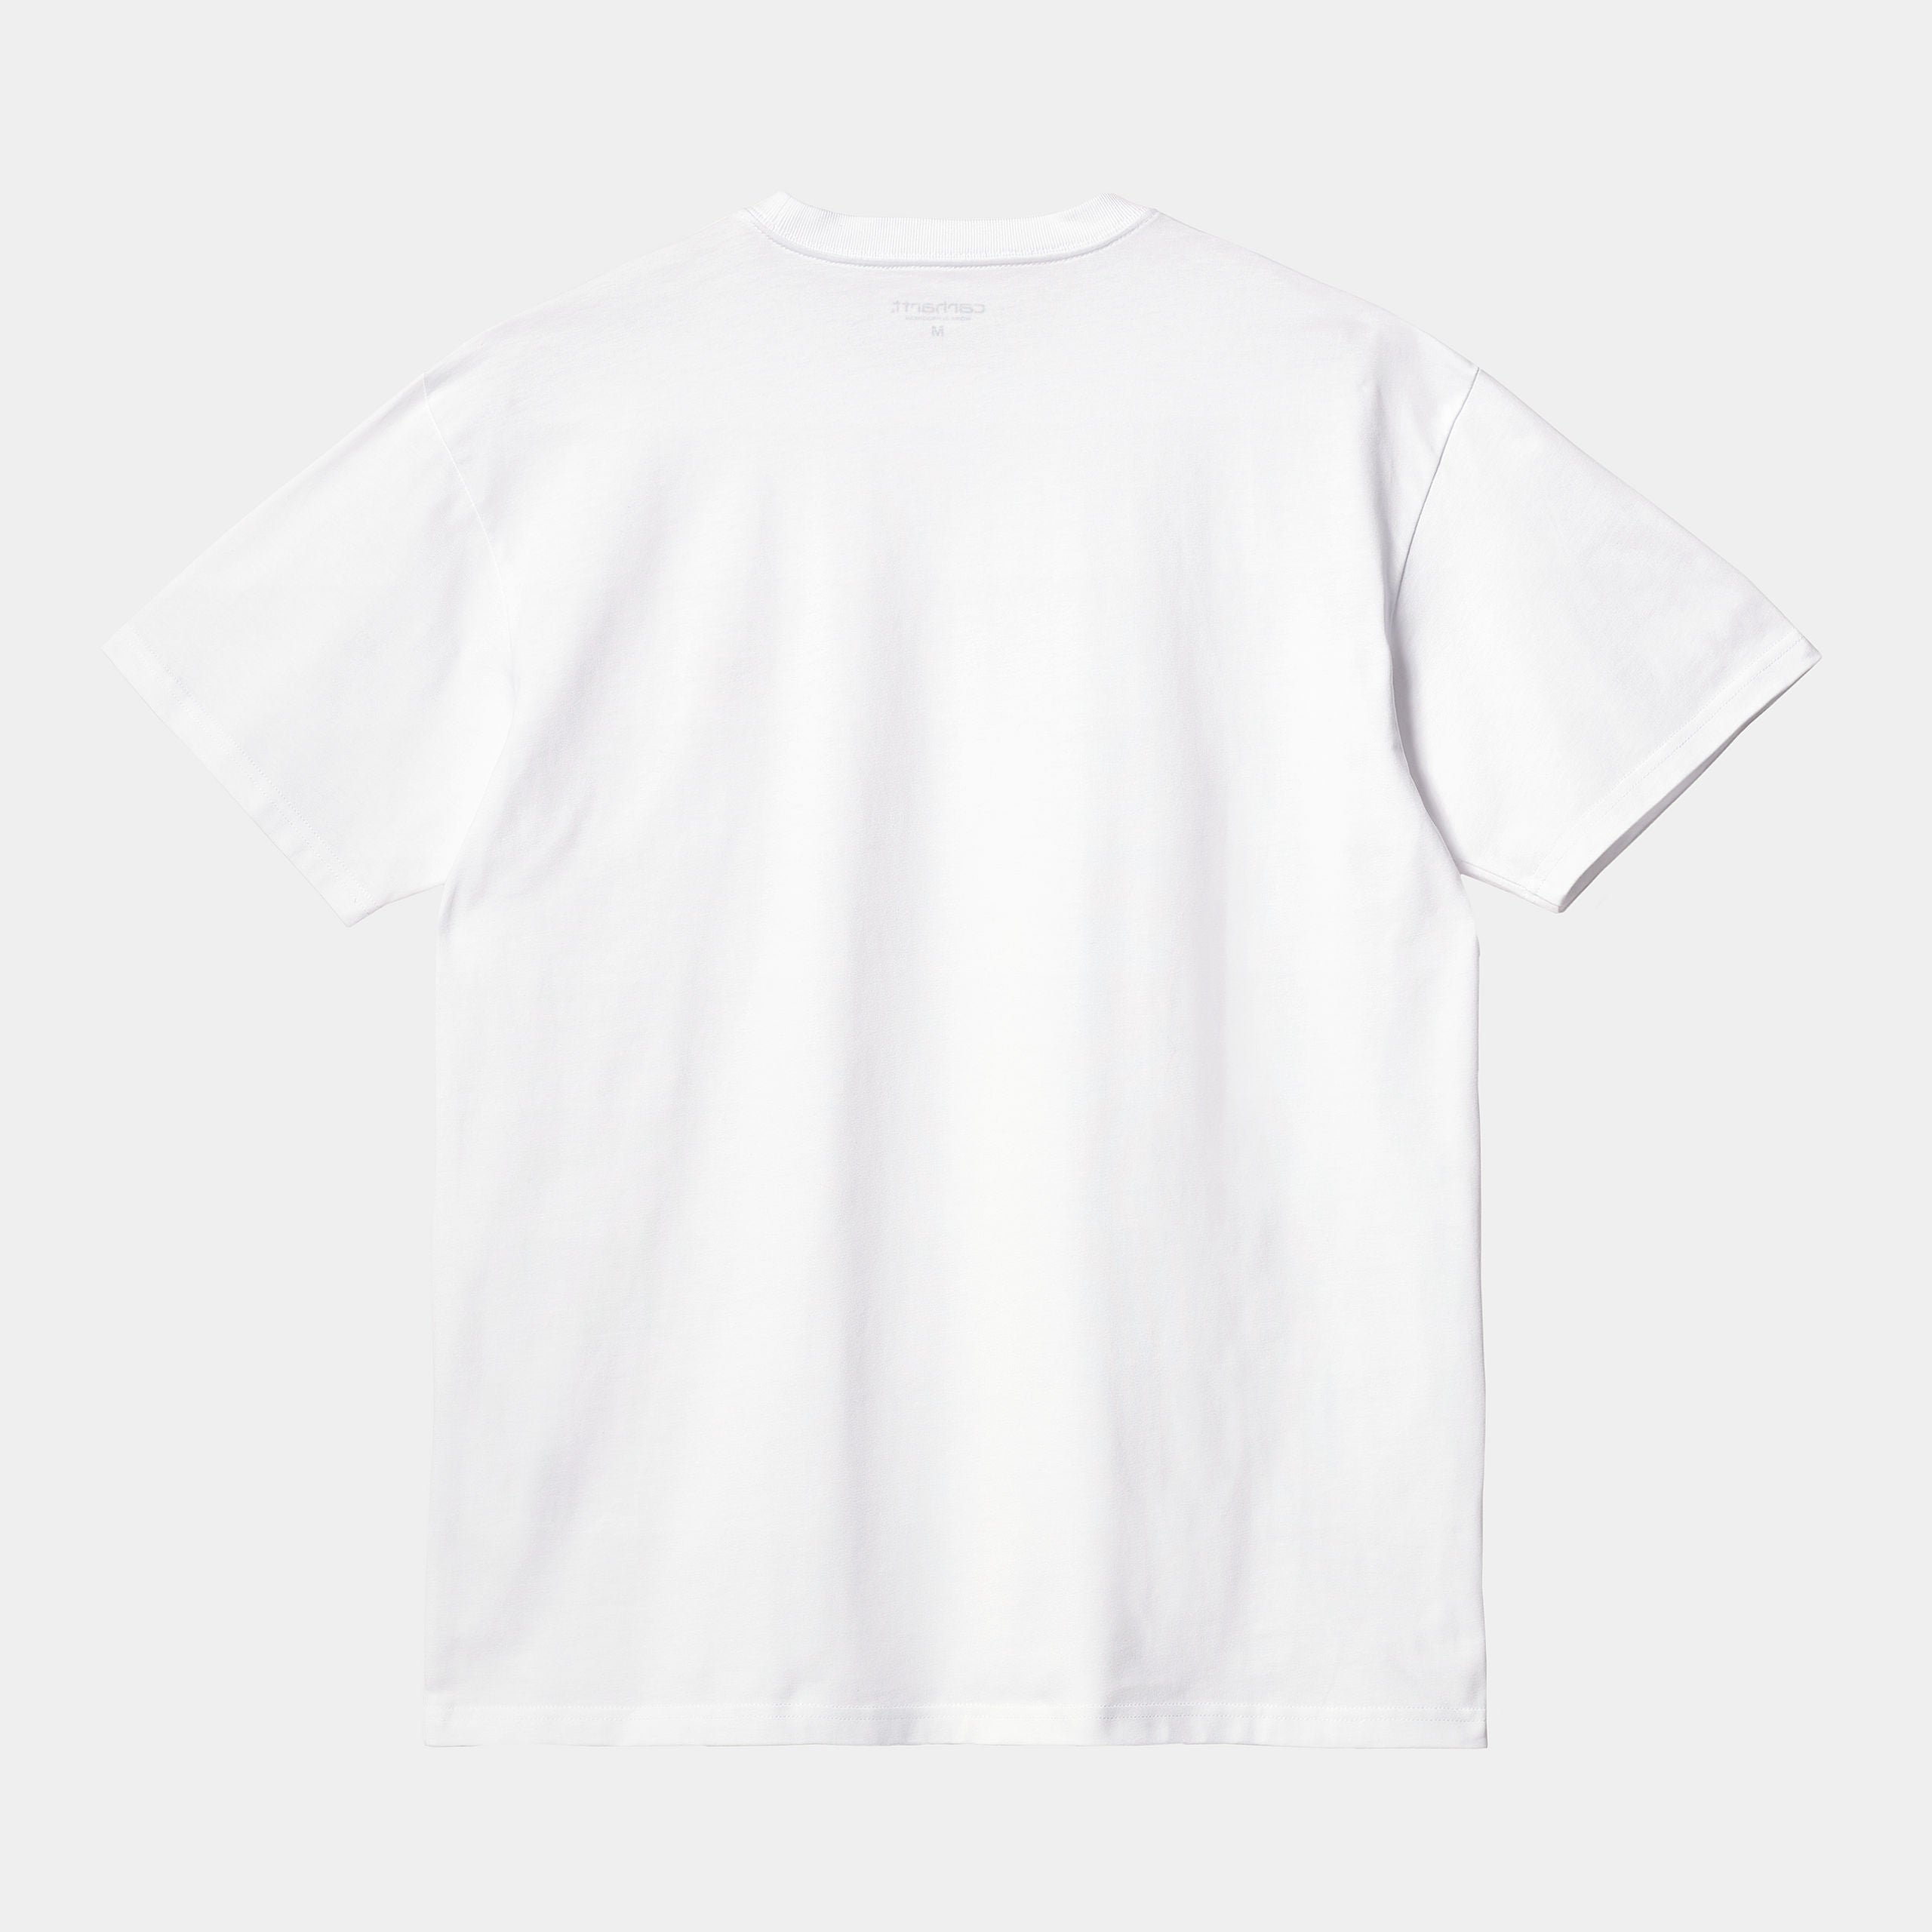 Carhartt Mens Chase Short Sleeve T-Shirt - White / Gold